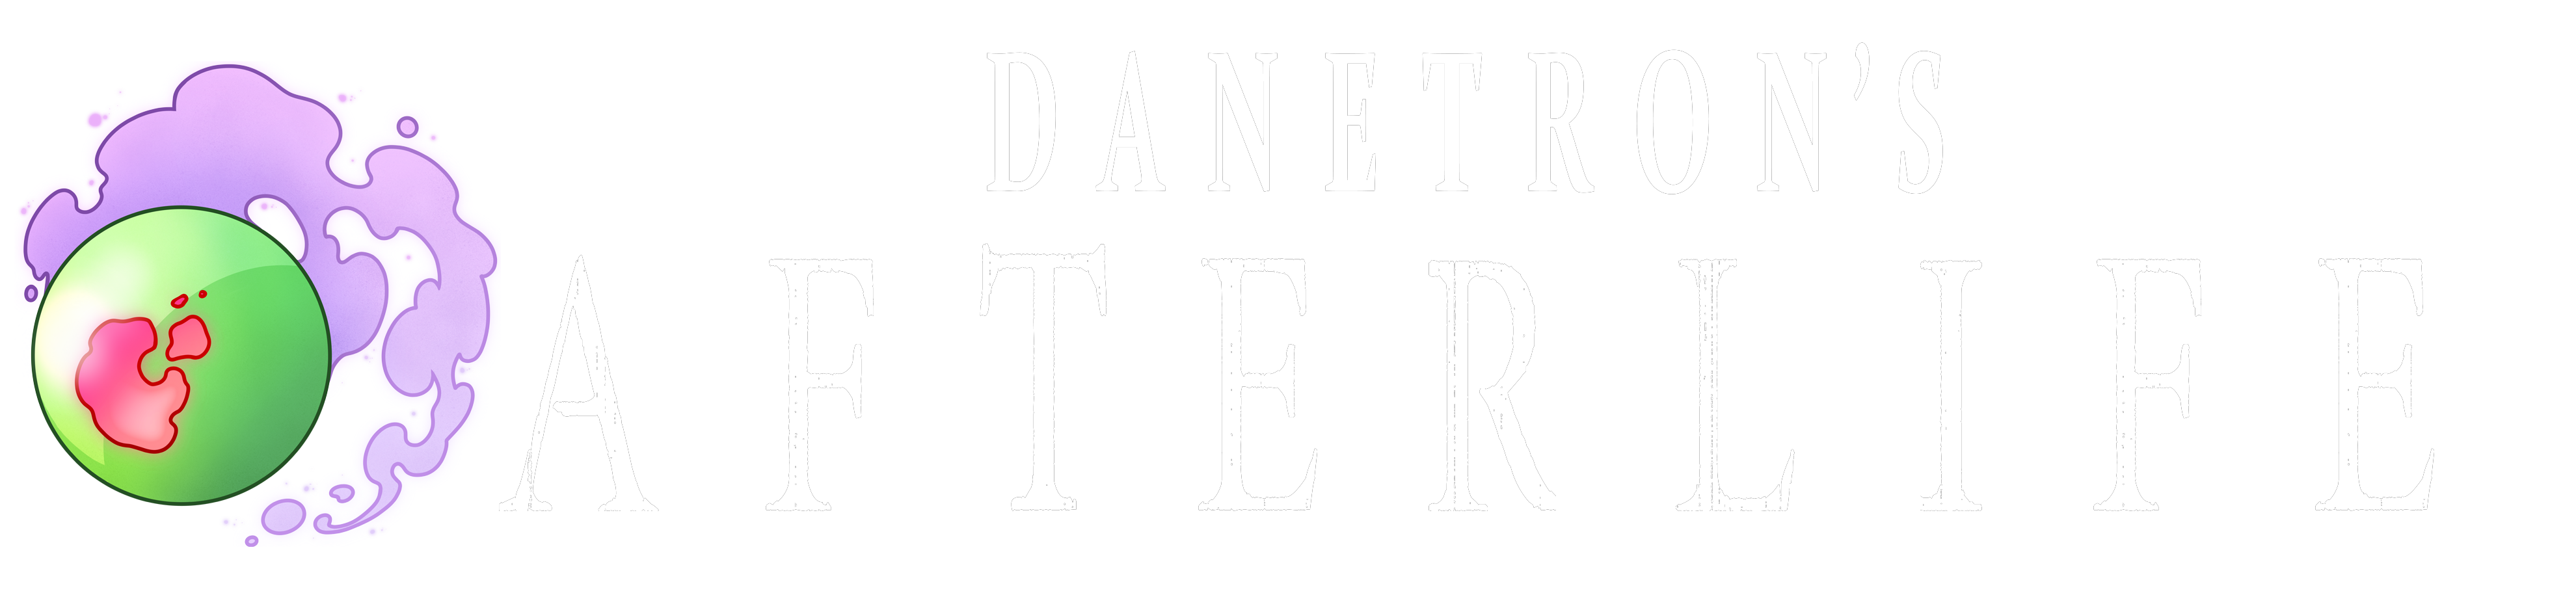 Danetron3030's Afterlife